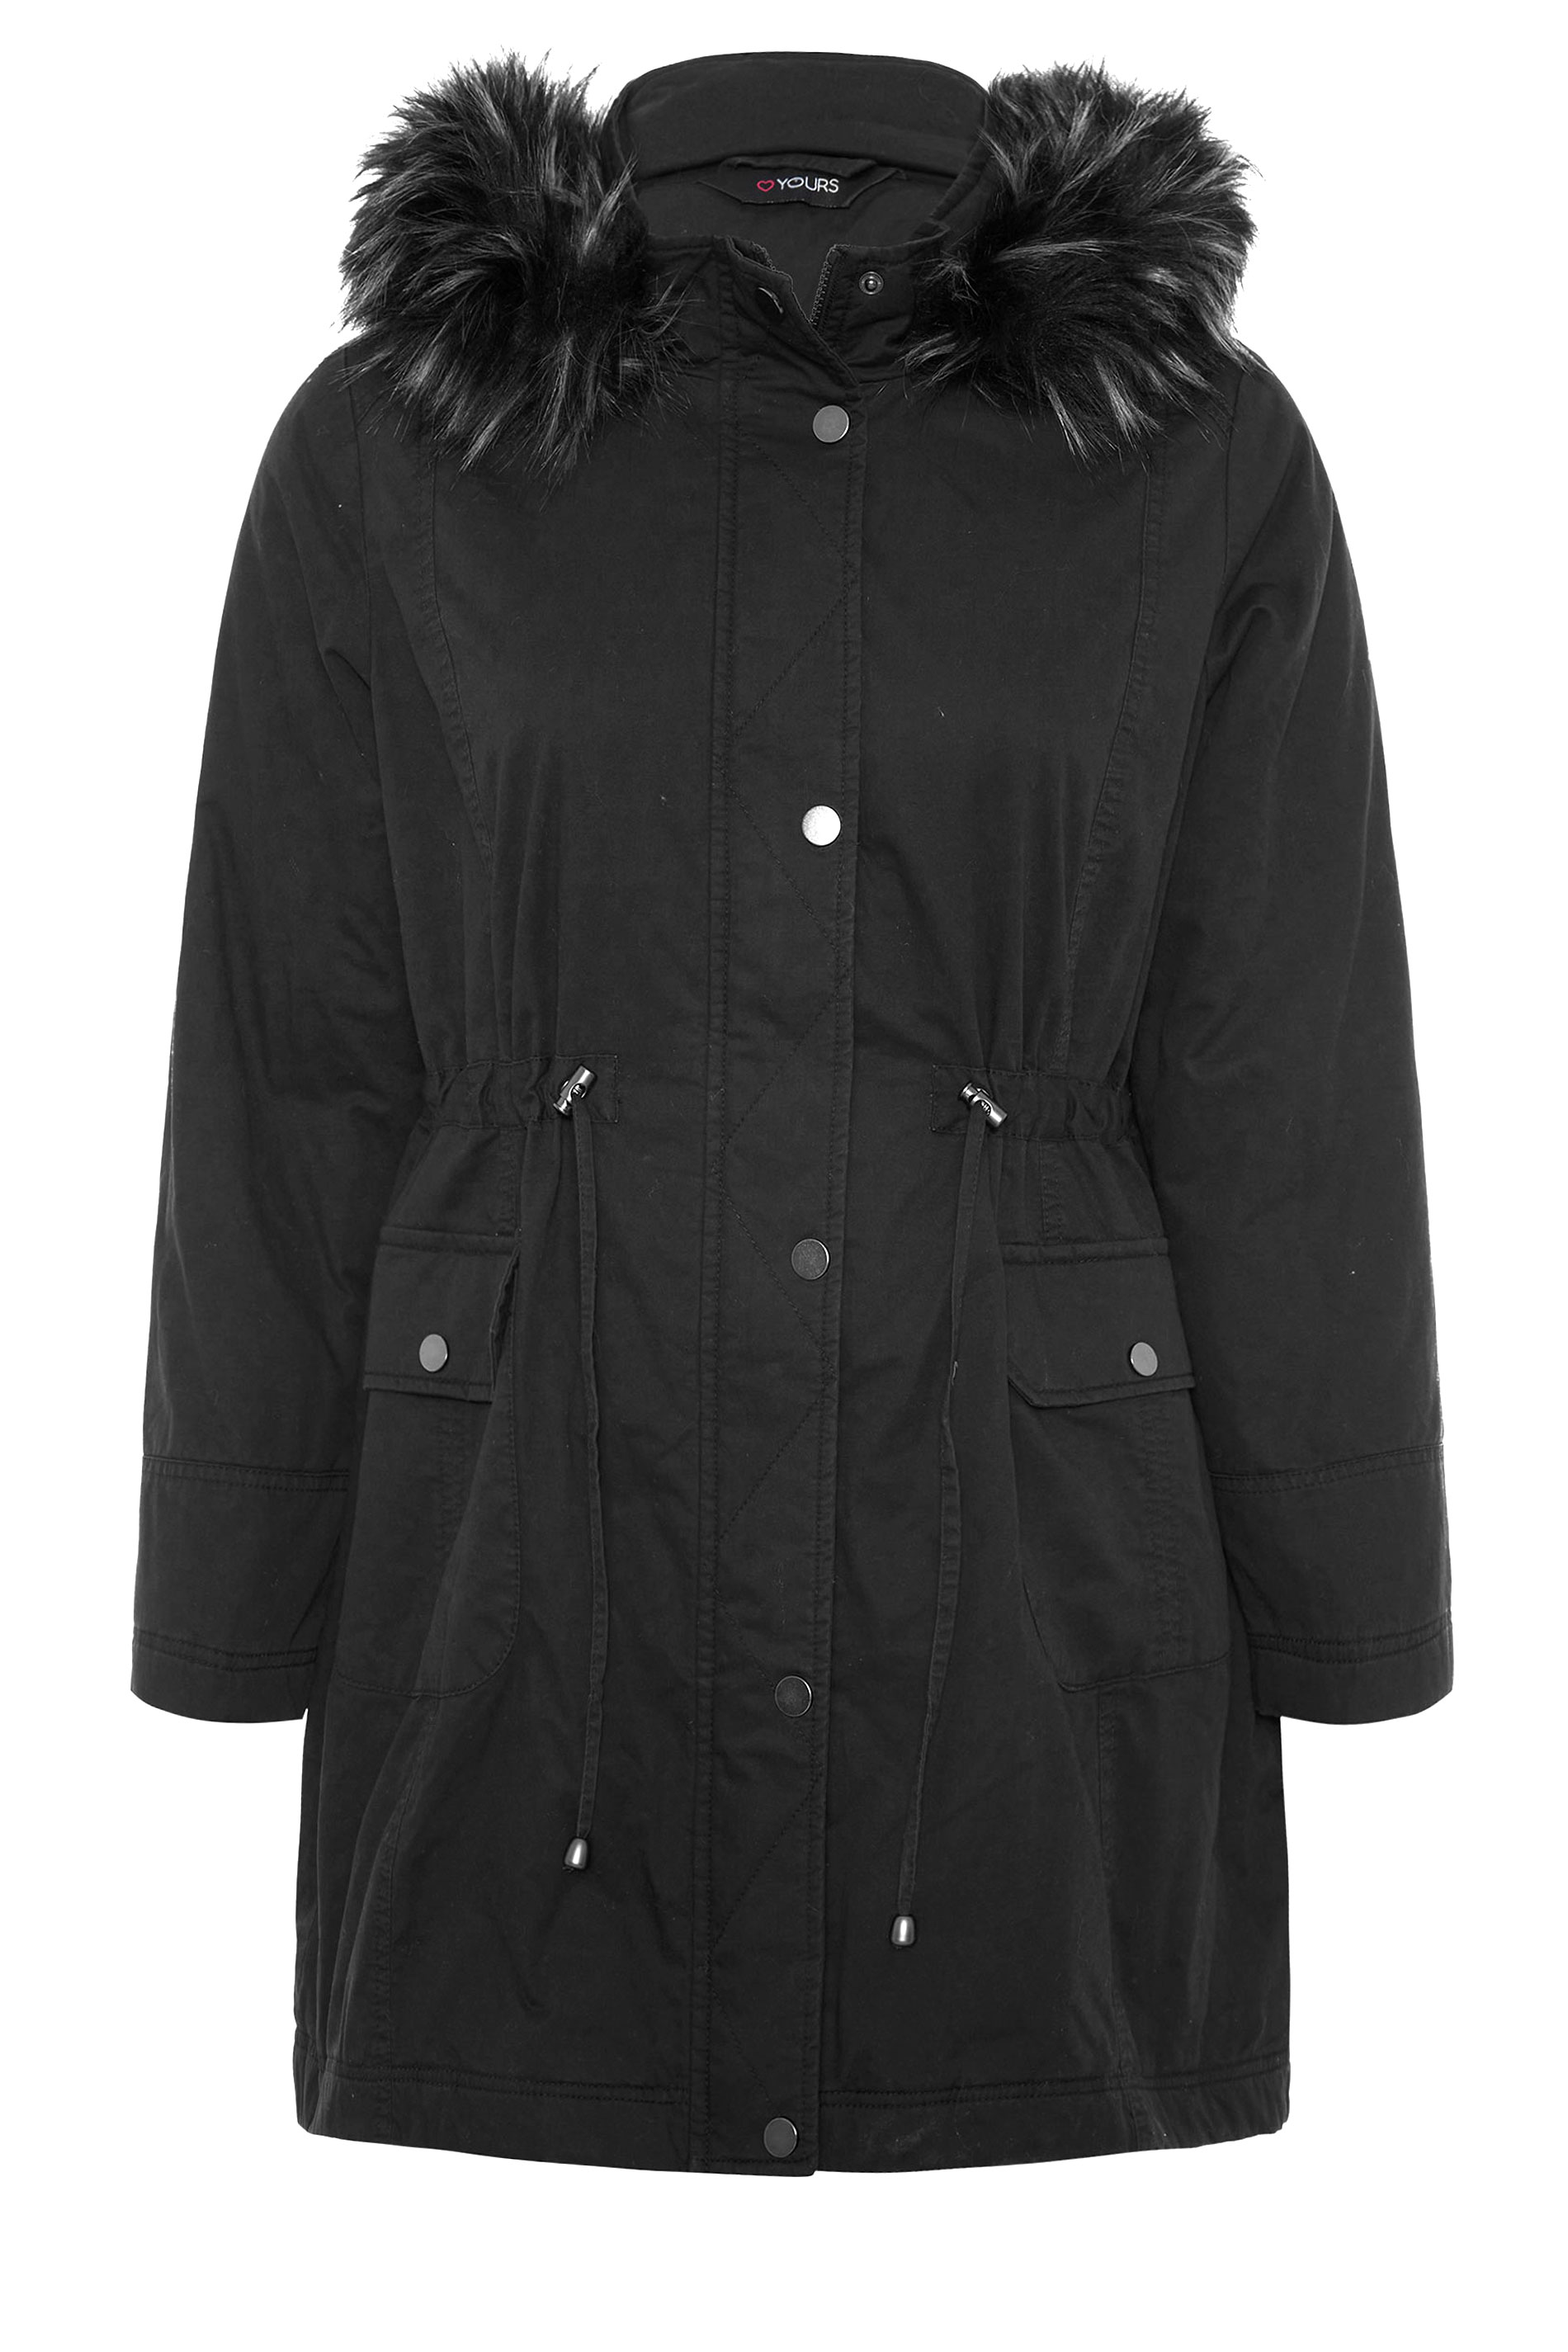 Plus Size Black Faux Fur Trim Hooded Parka | Yours Clothing